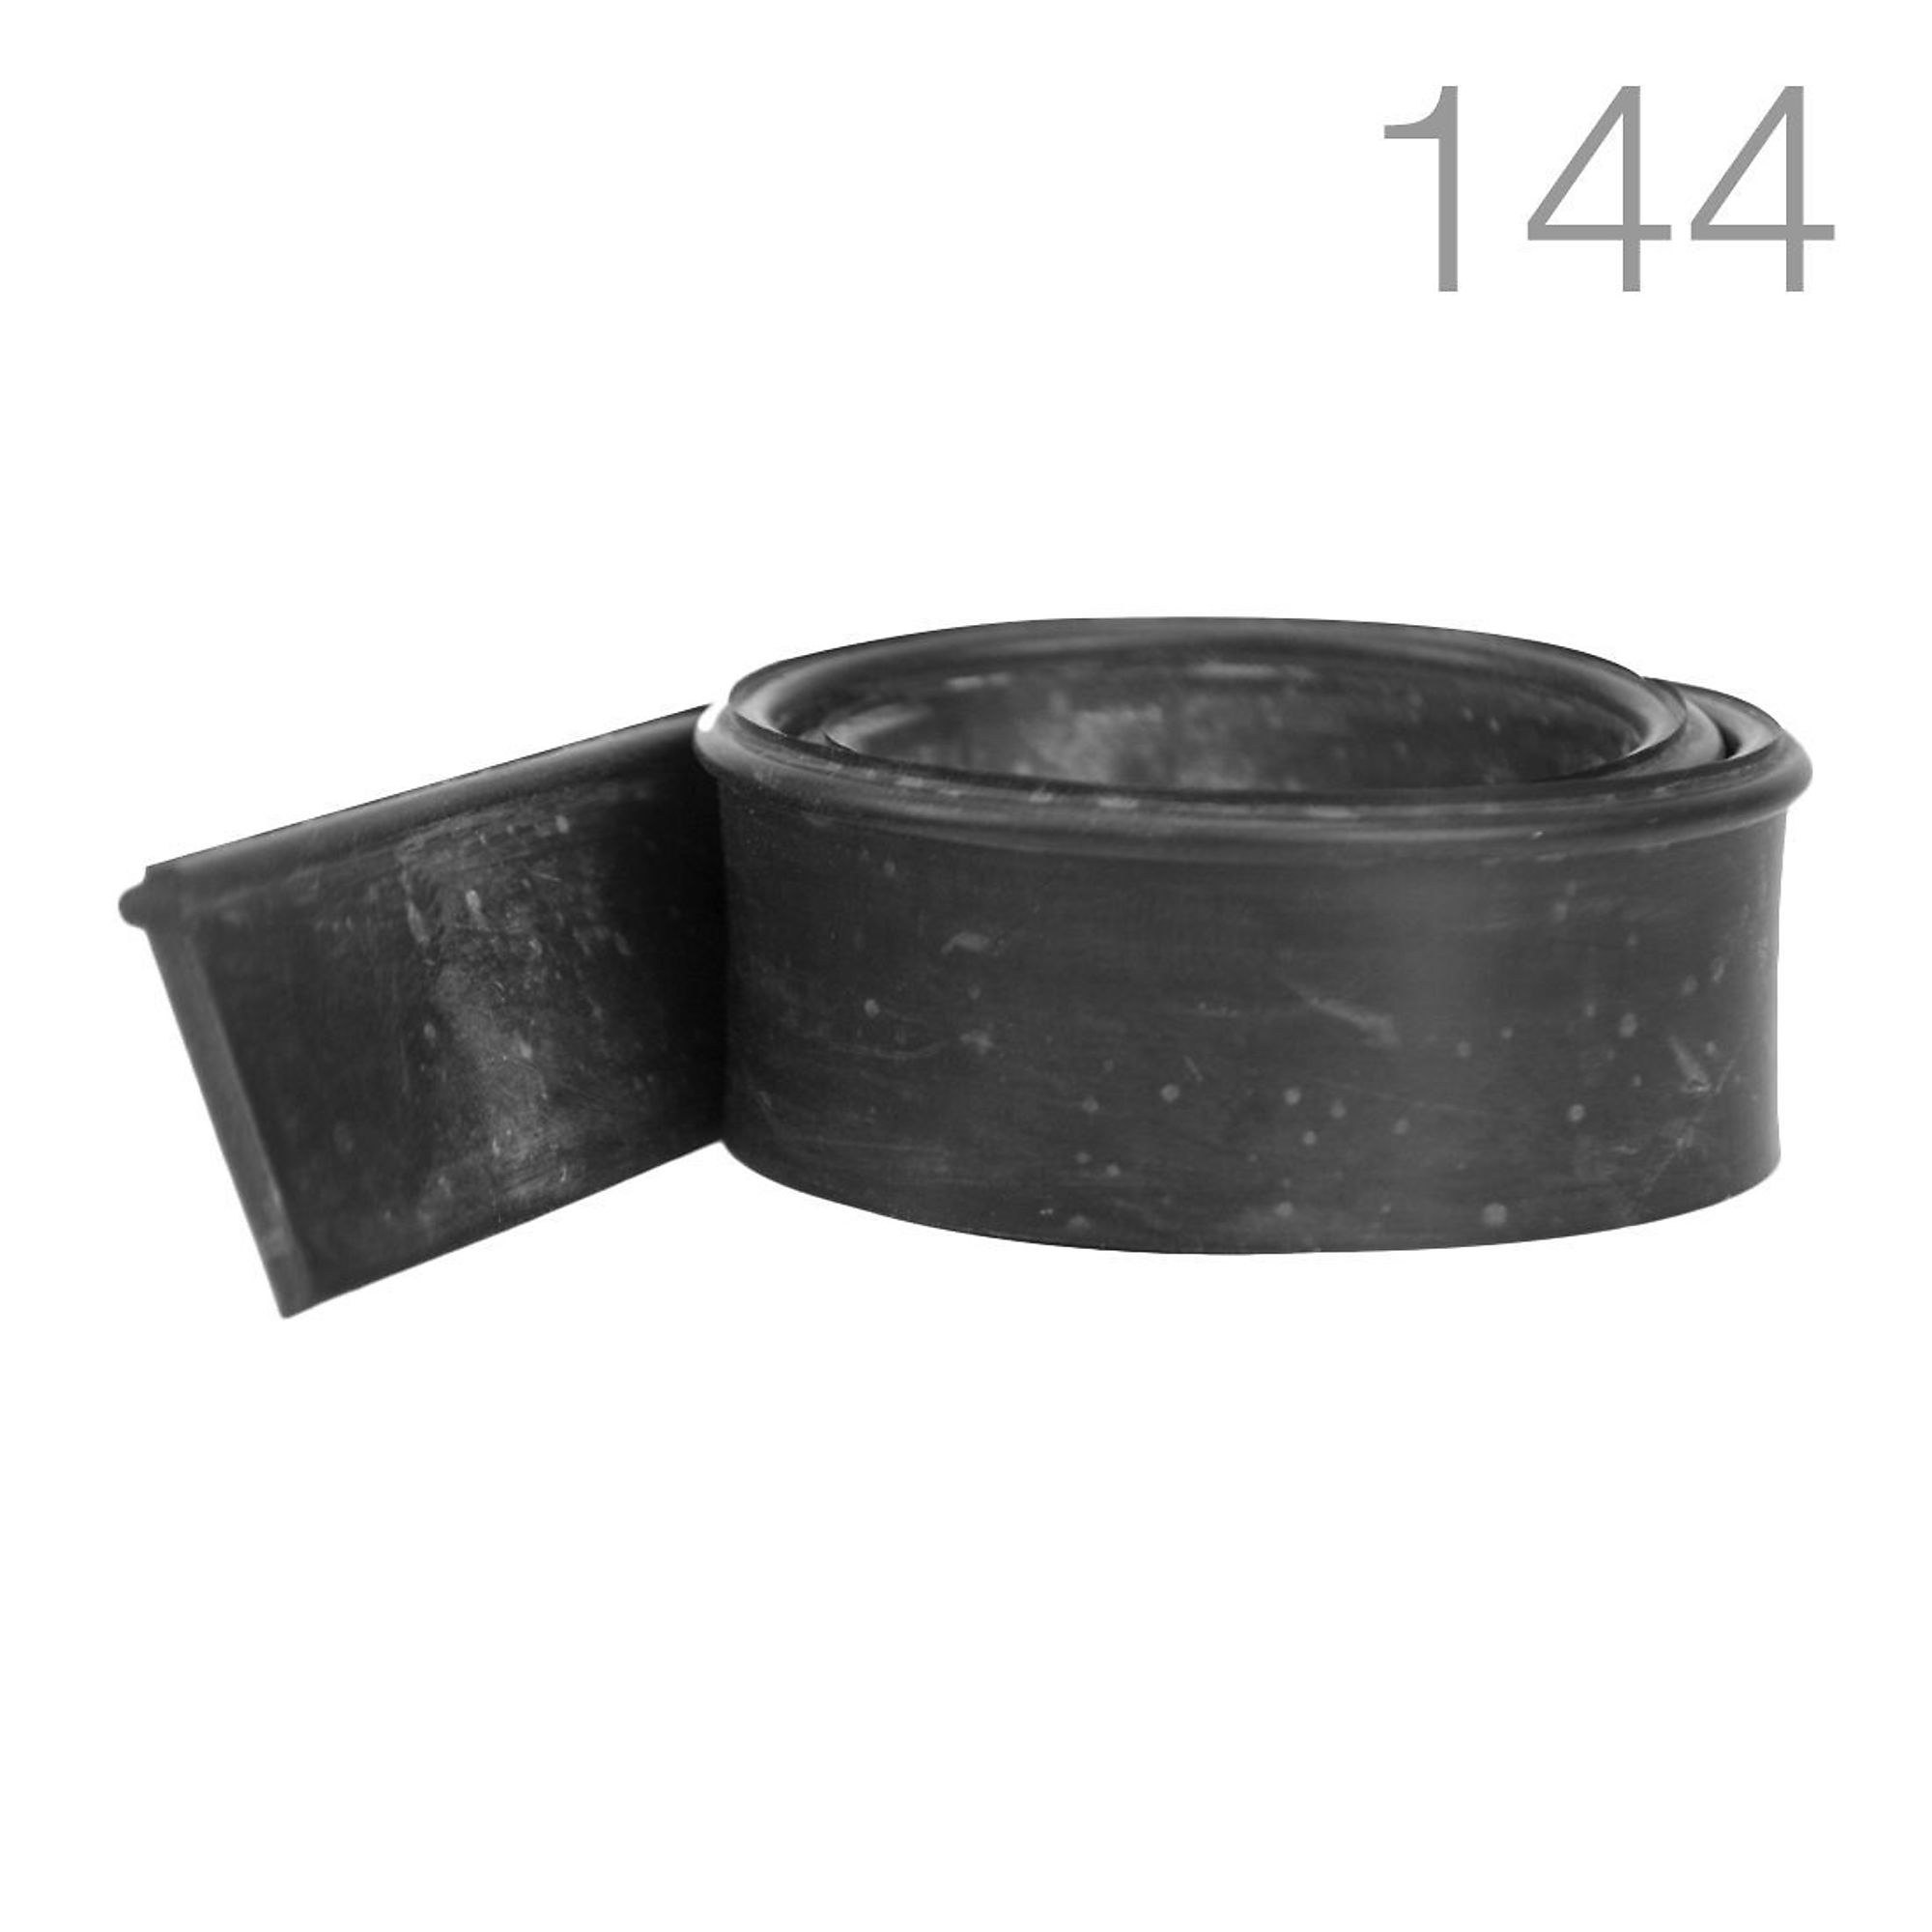 BlackDiamond, Flat Top Medium Squeegee Rubber Gross - 20Inch, Model 012-05-60